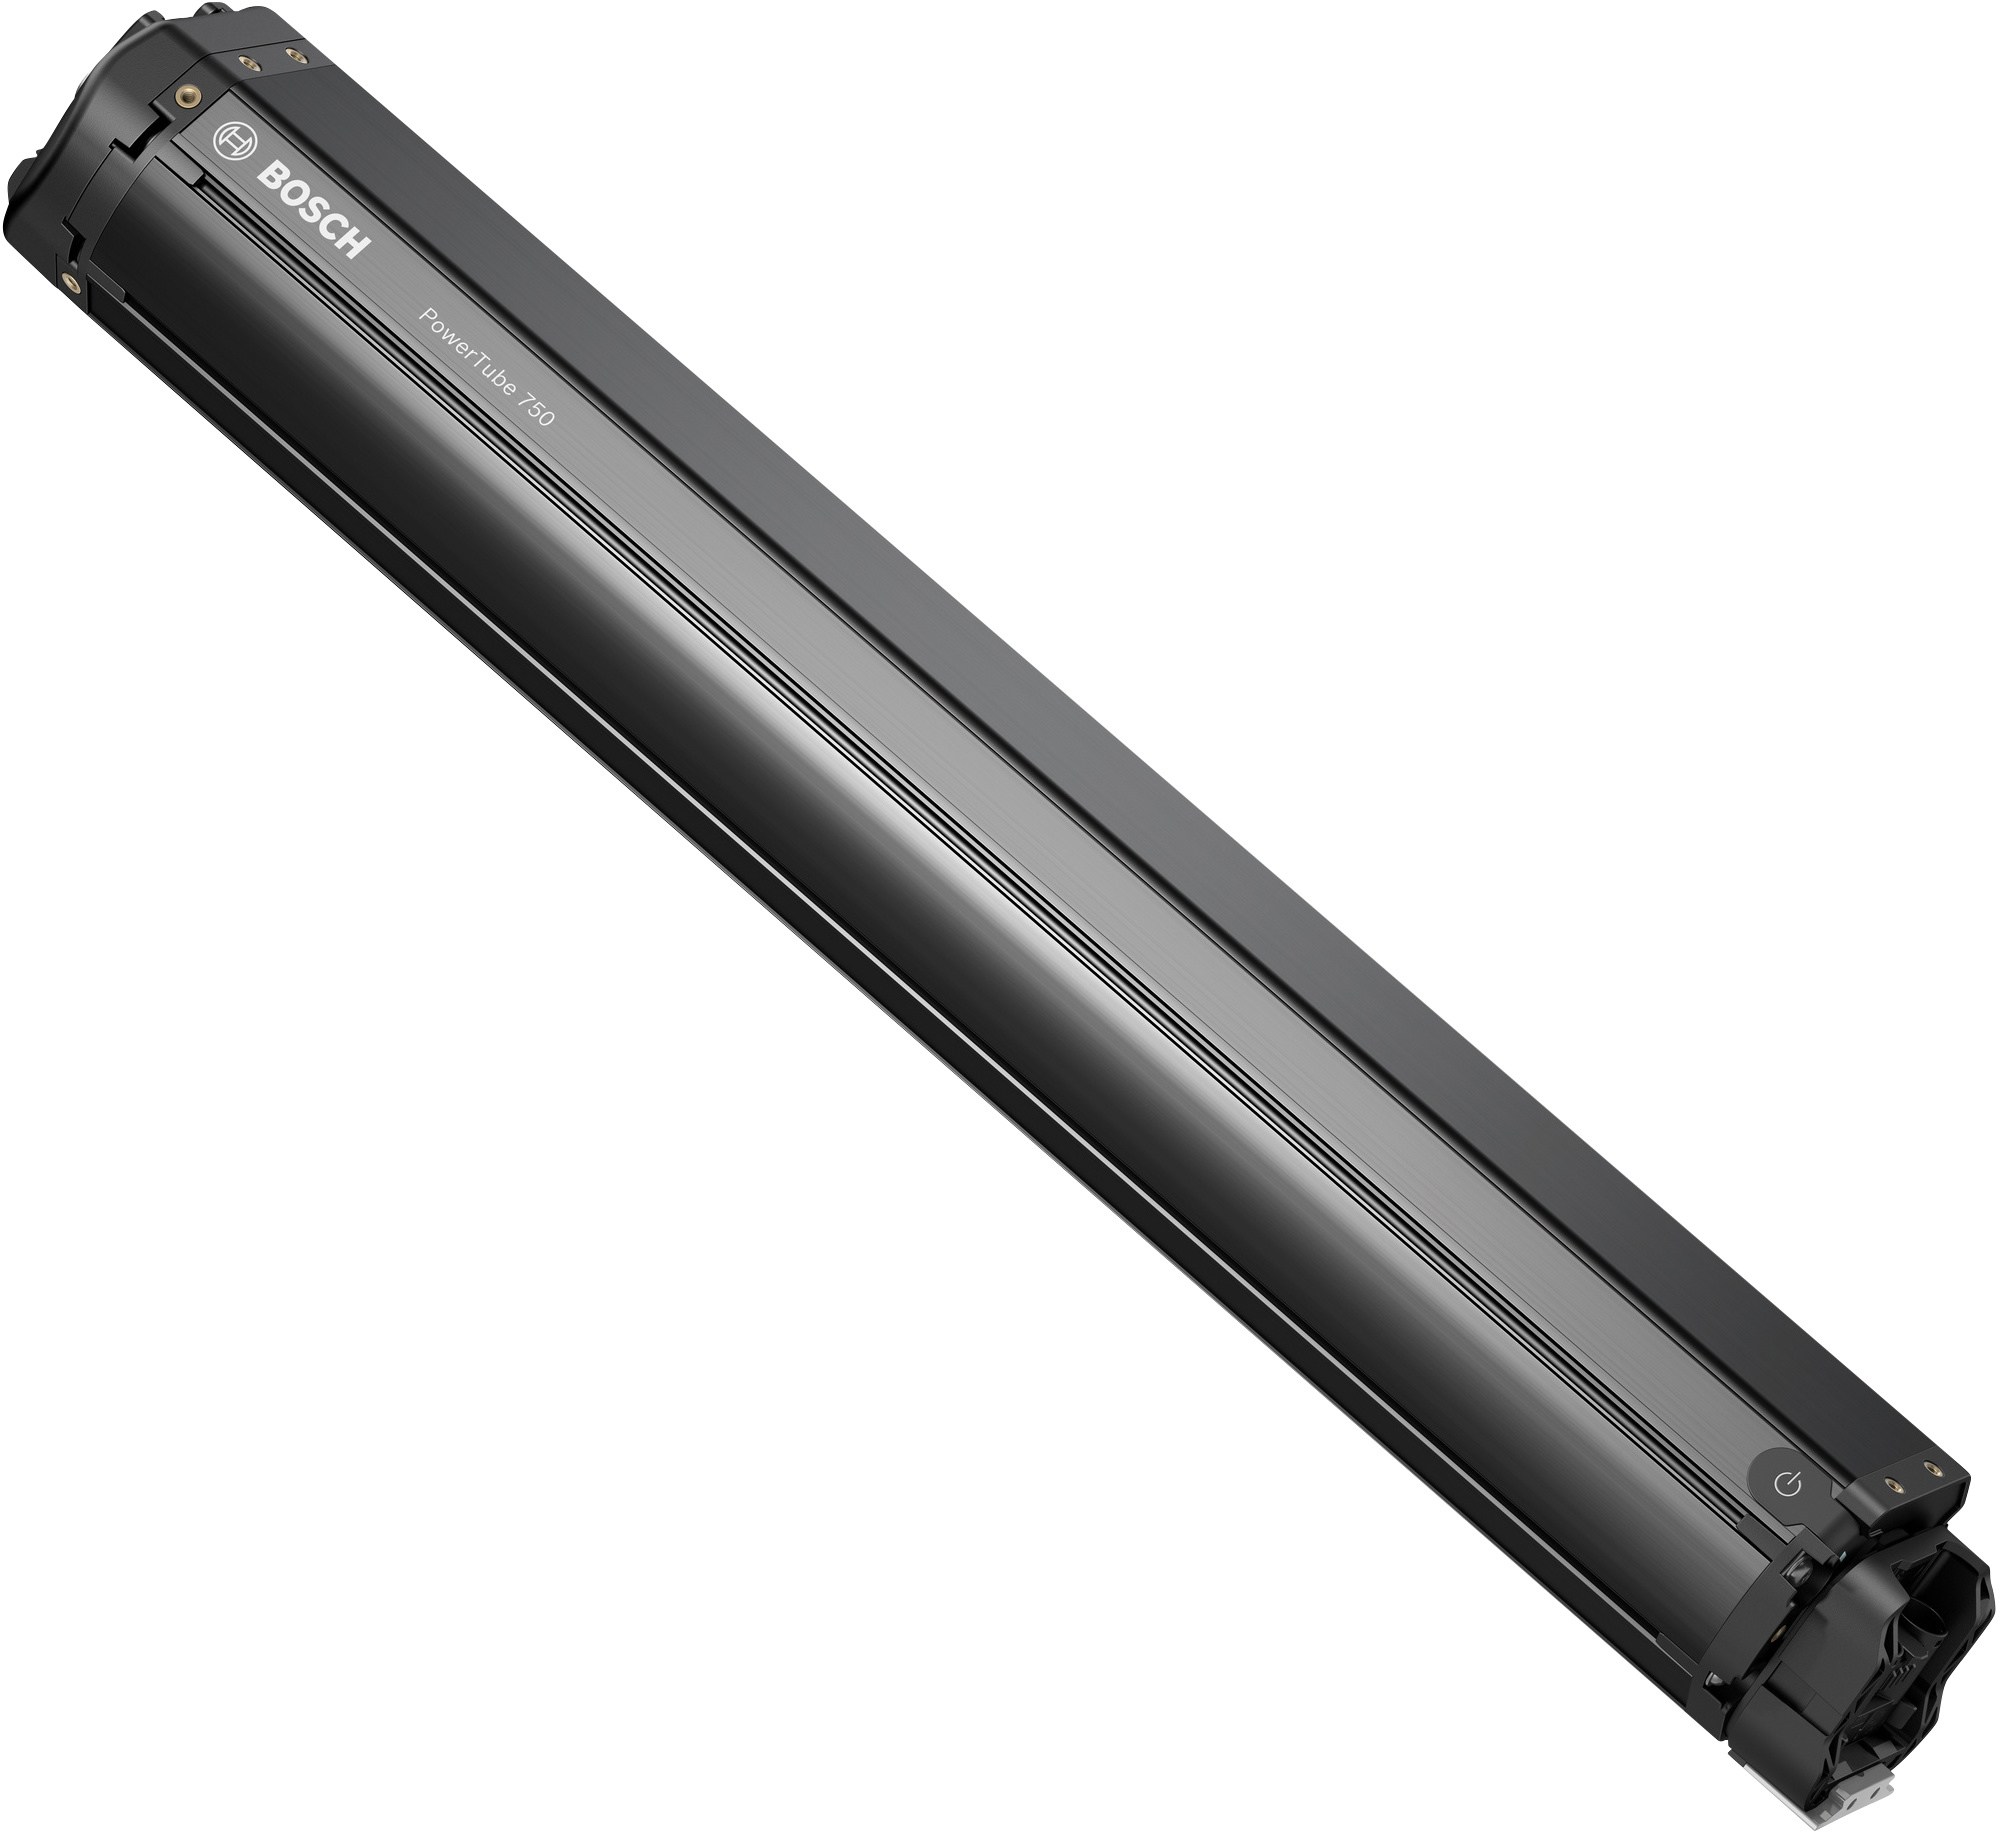 Аккумулятор PowerTube 750 для электровелосипеда — вертикальное крепление Bosch new2023 acuum leaner owerful заряжаемый заряжаемый изогнутый leaners ortable или ar ome et air